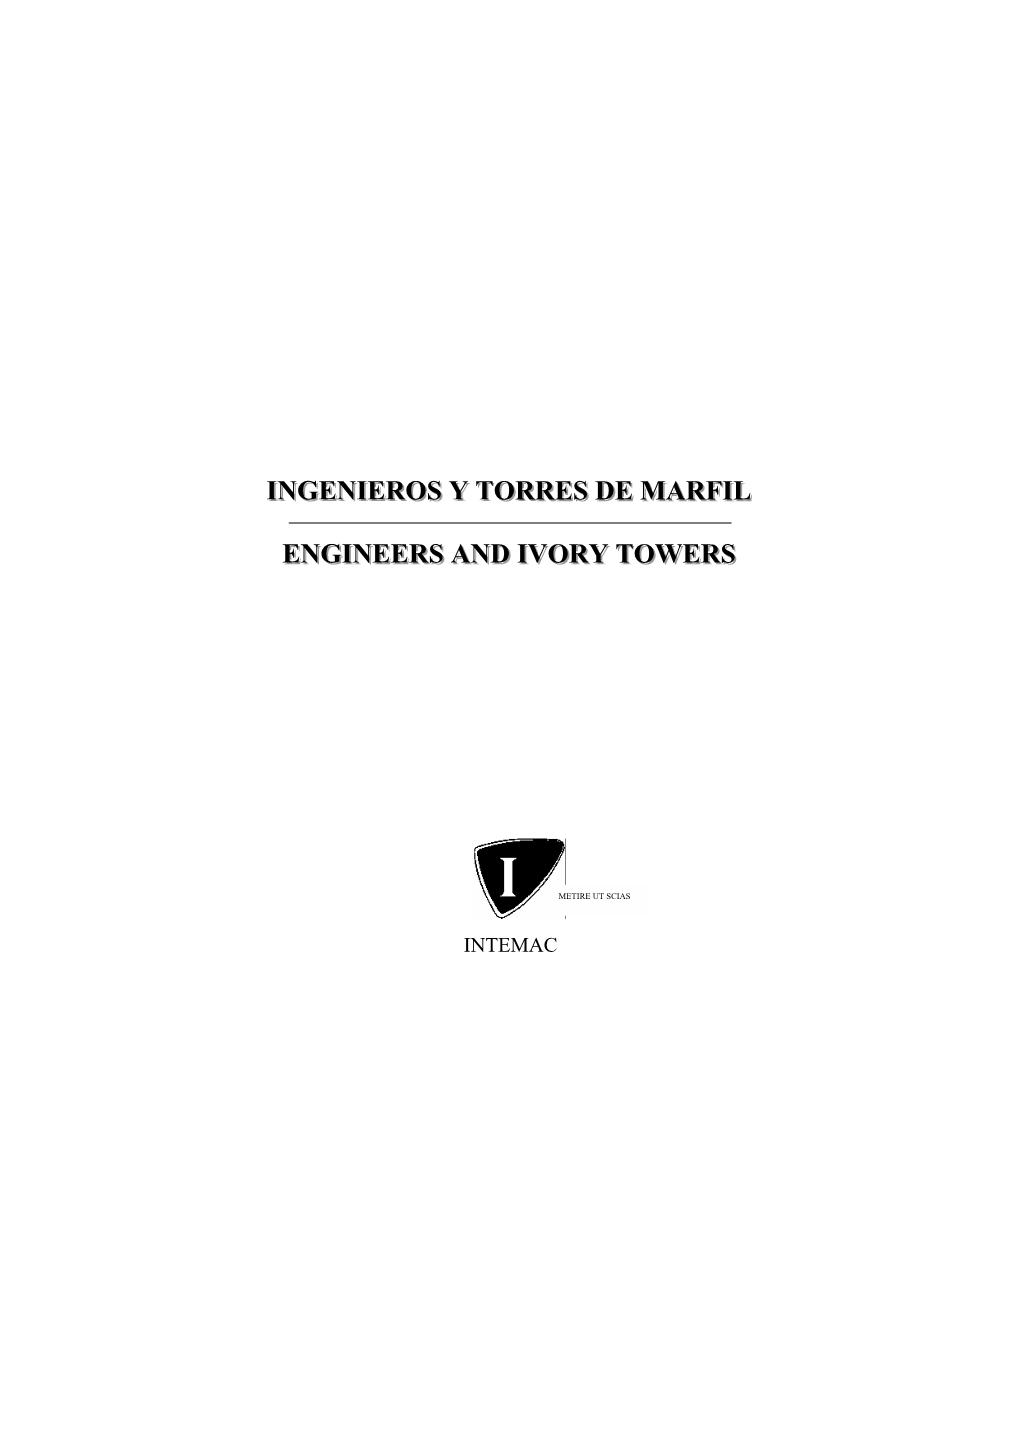 Ingenieros Y Torres De Marfil Engineers and Ivory Towers